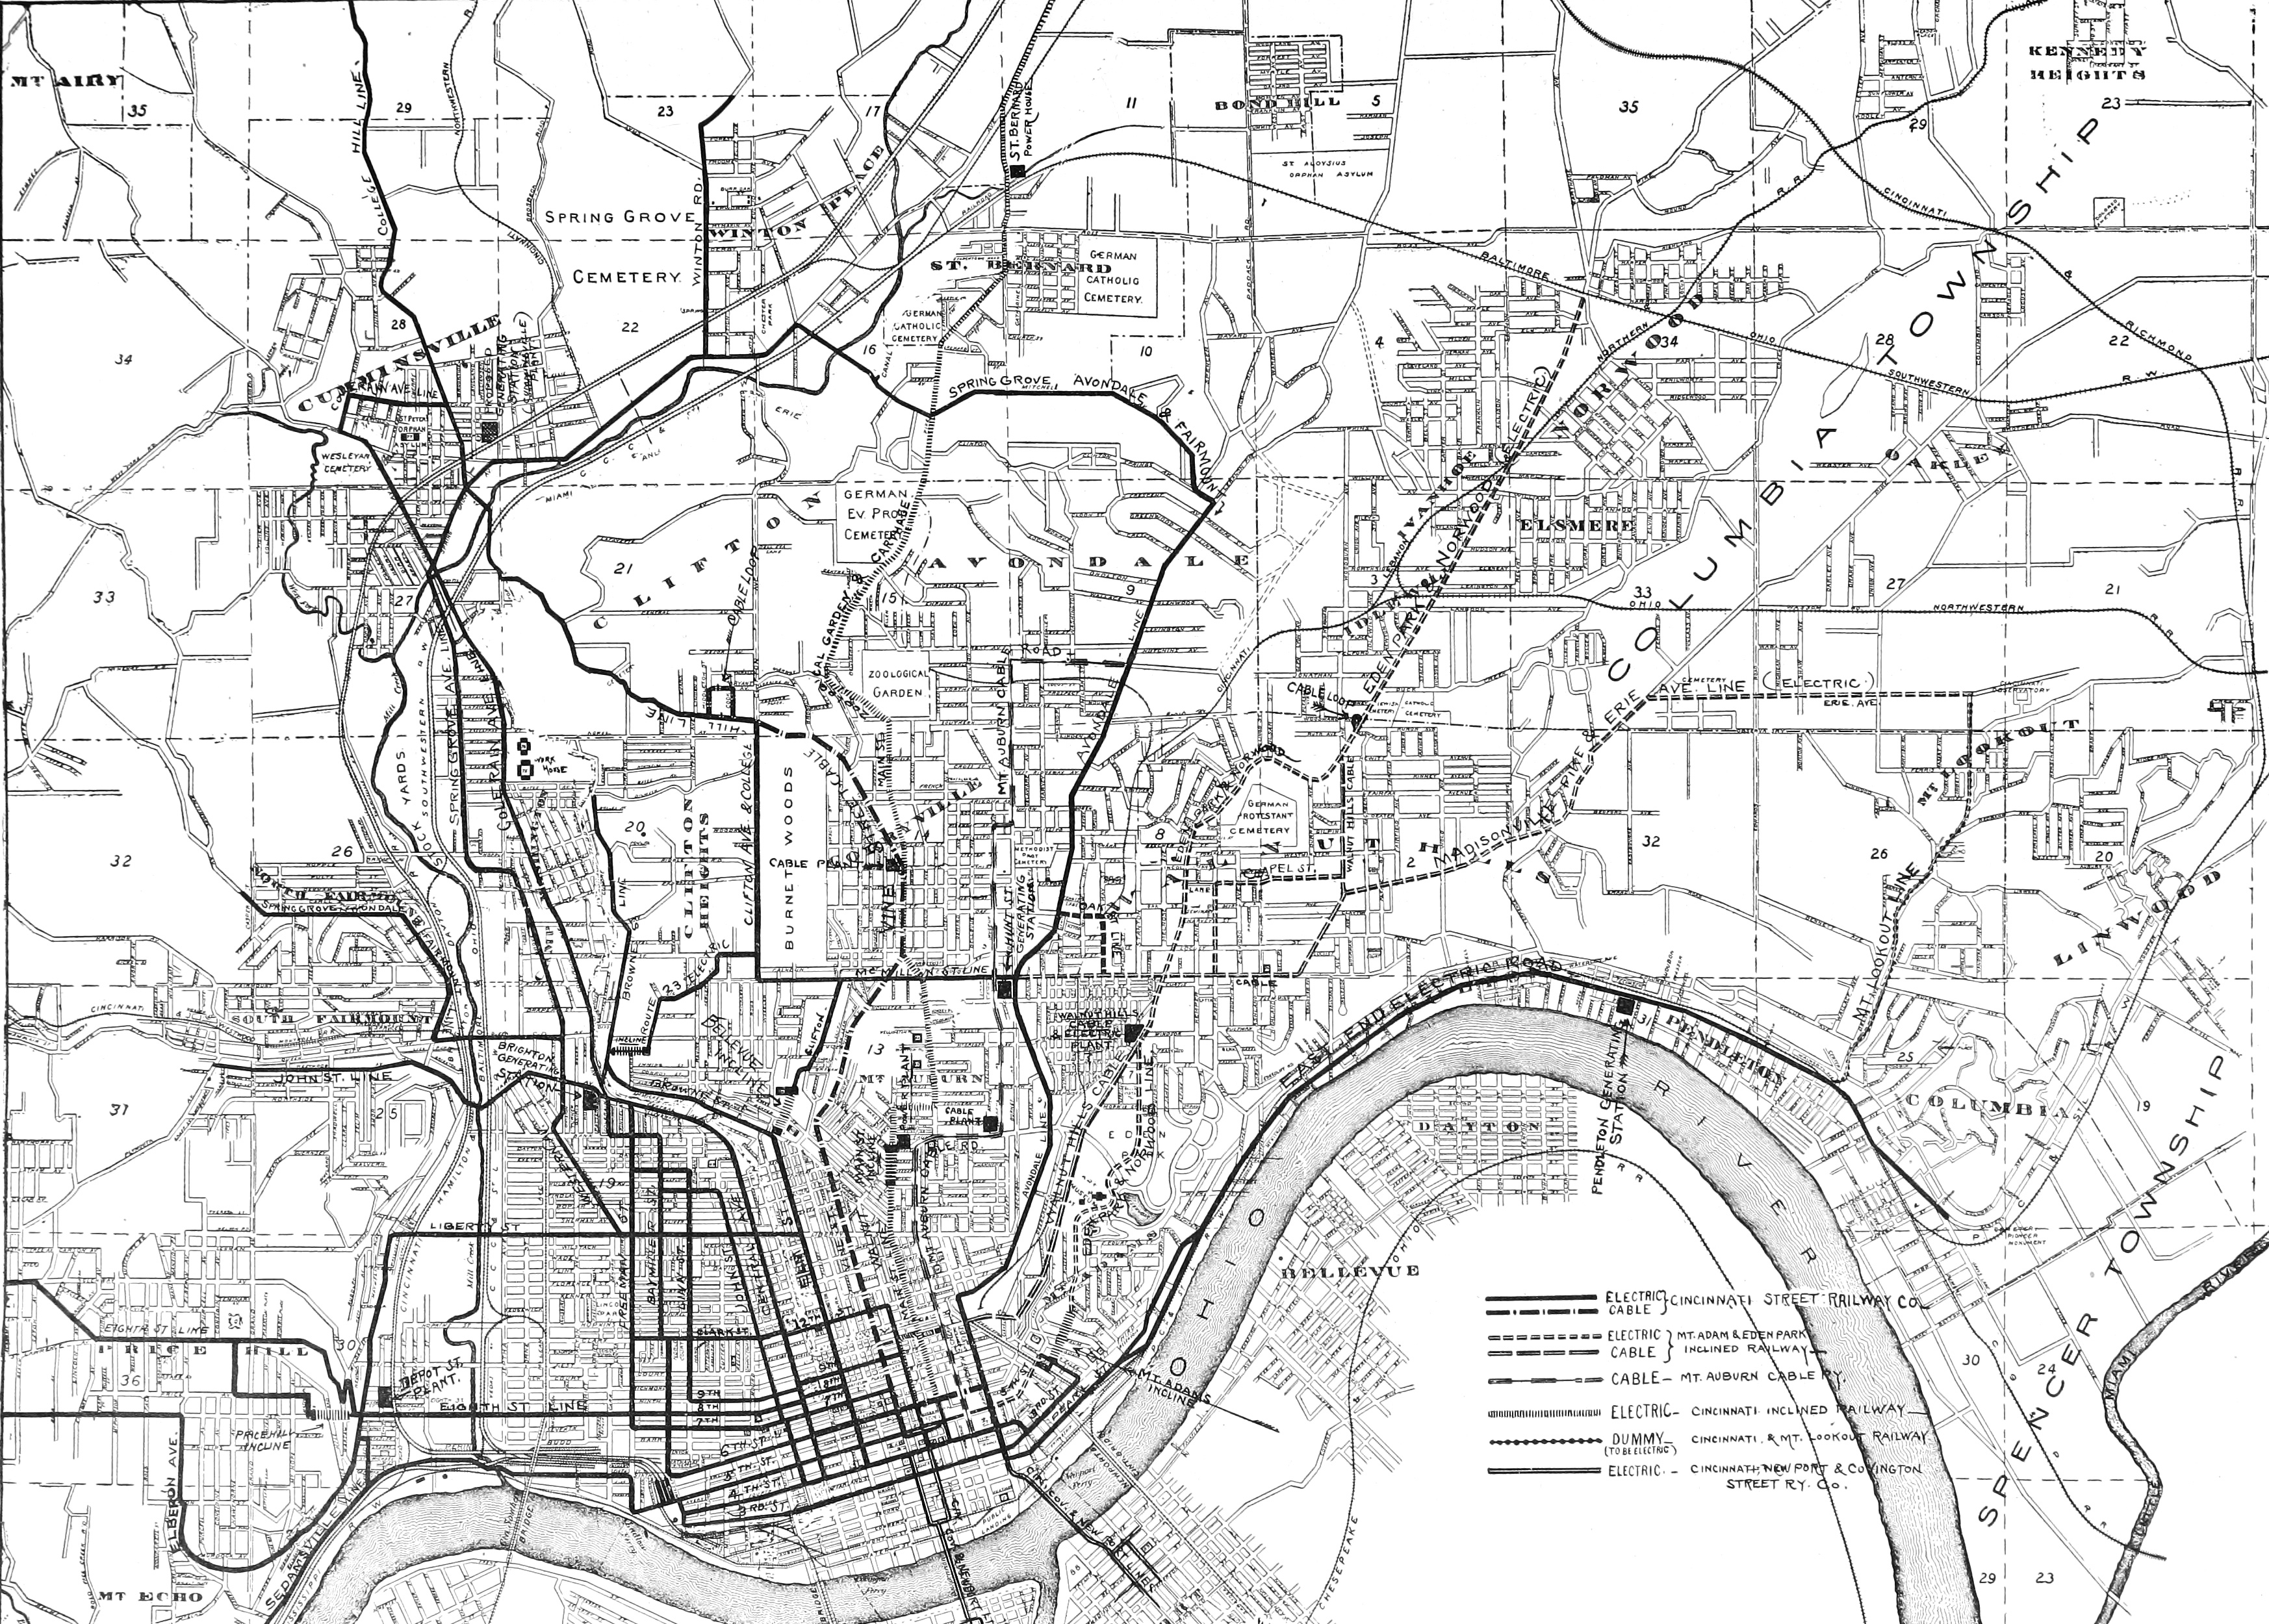 Cincinnati — Maps and Plans